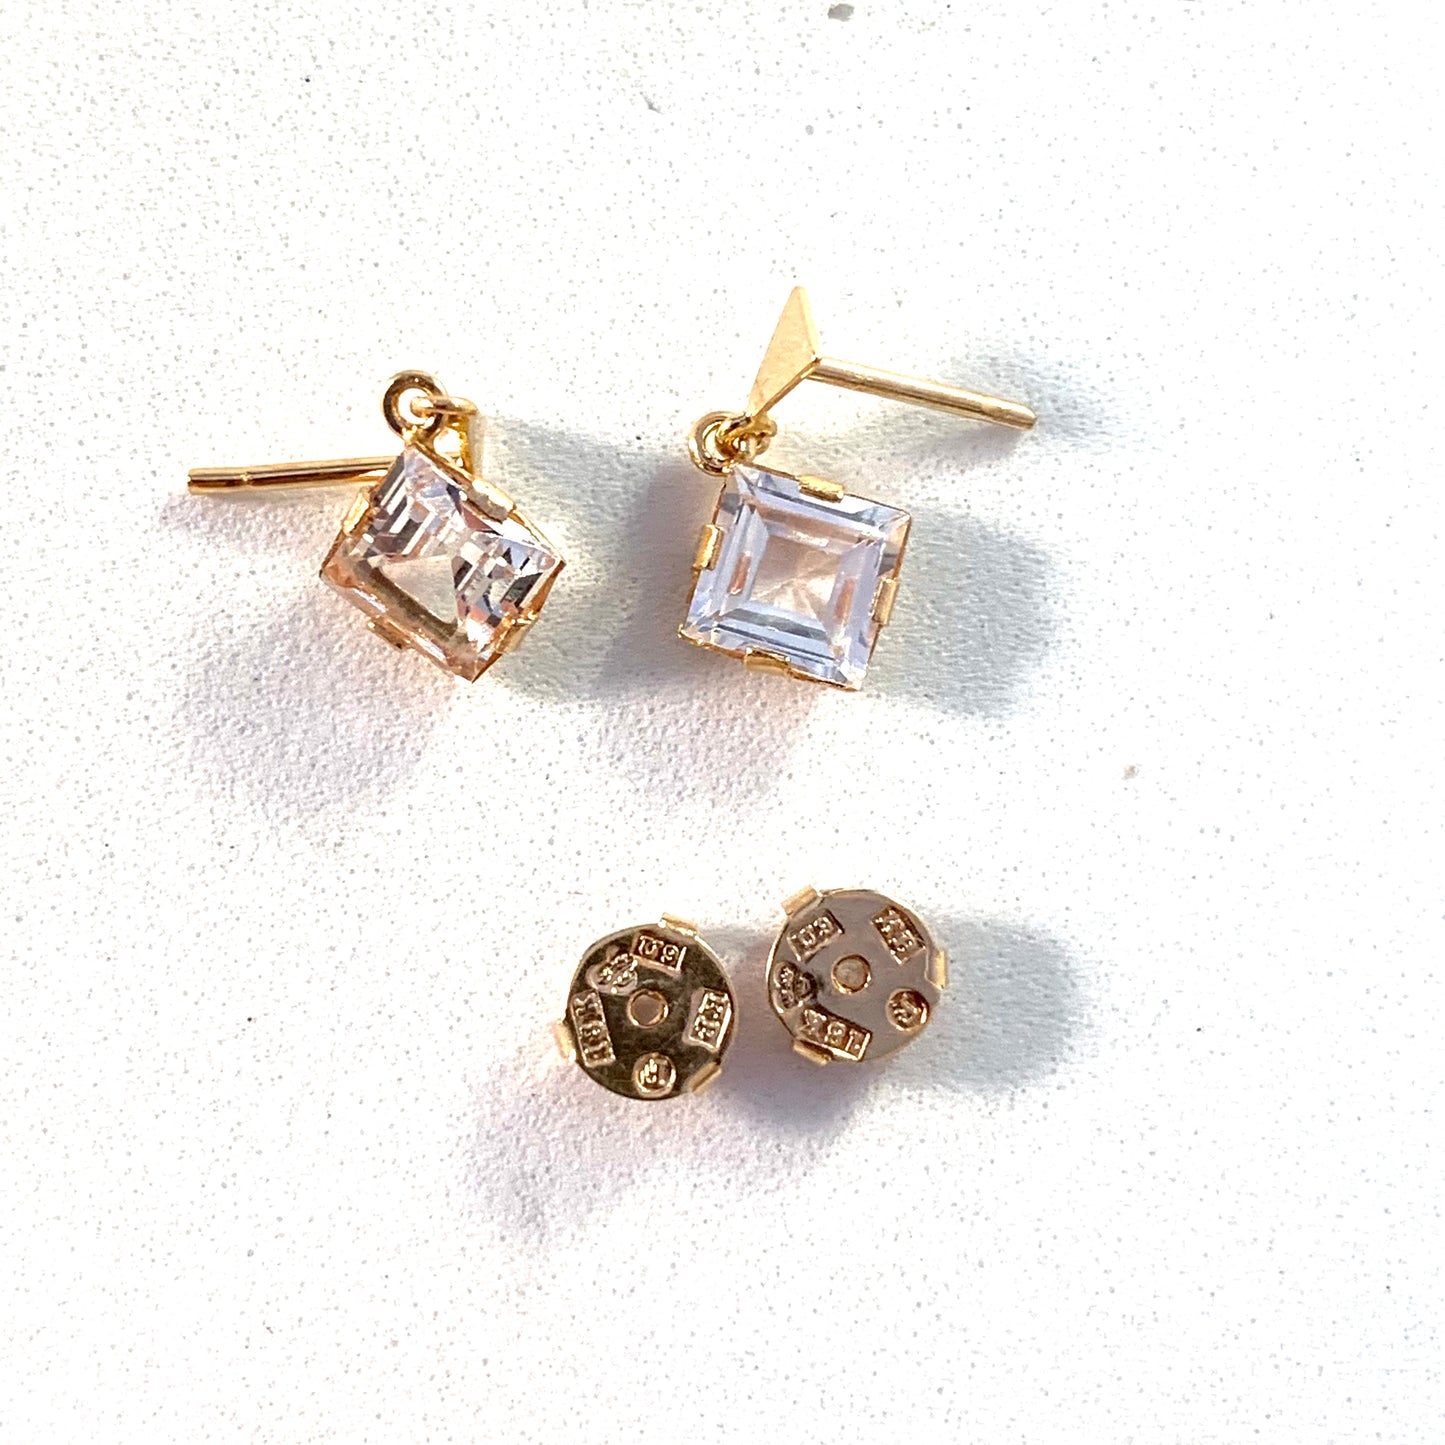 Alton, Sweden year 1970 Modernist 18k Gold Rock Crystal Pair of Earrings